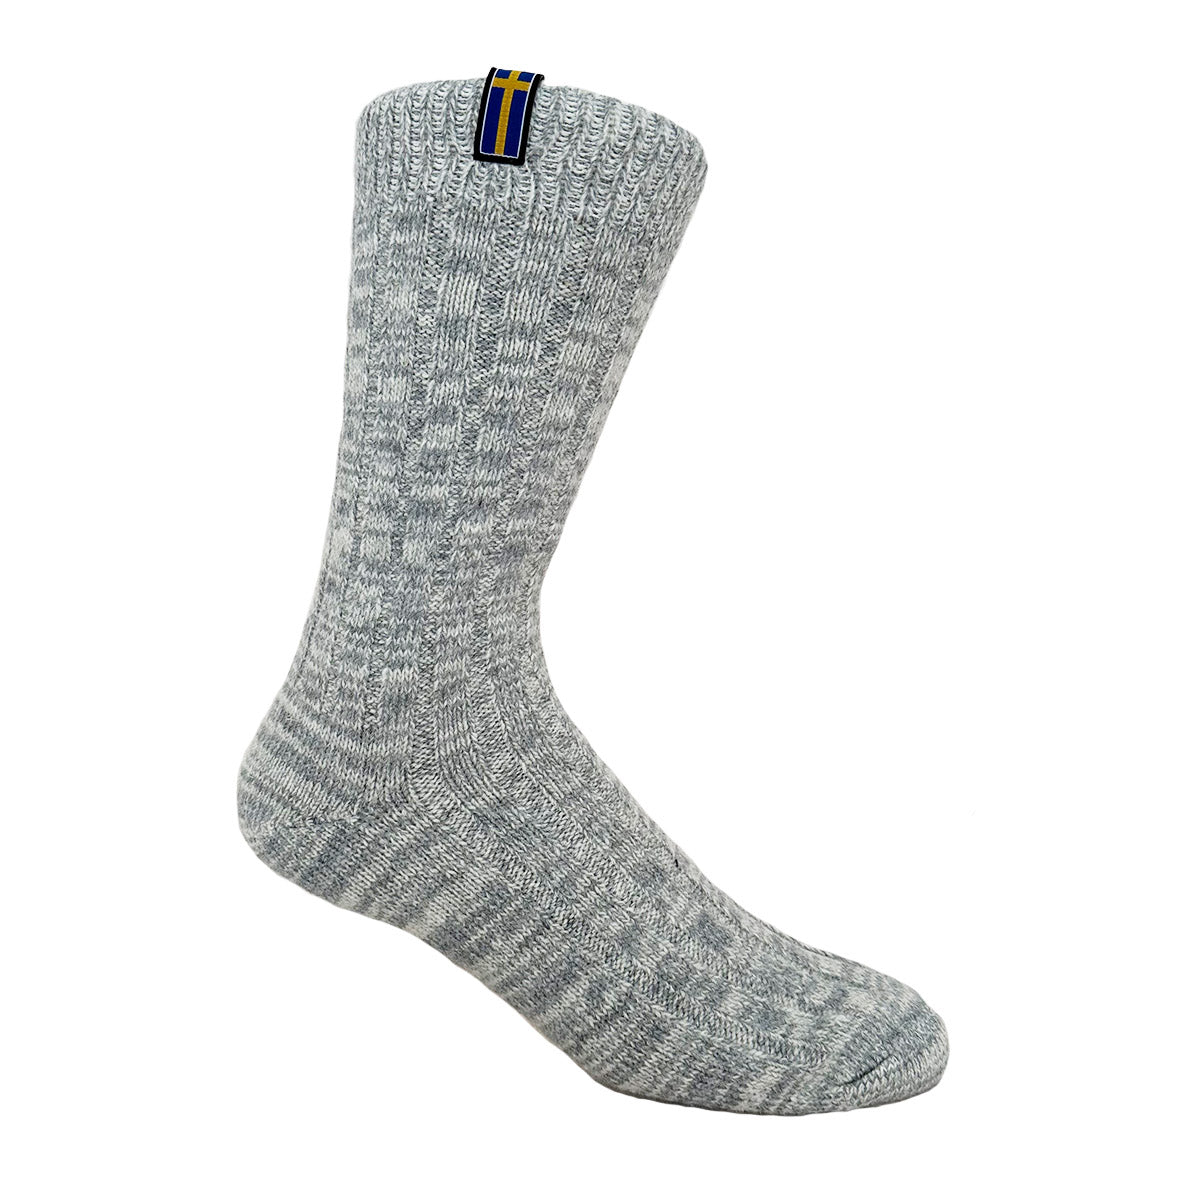 Sweden Mens Wool Socks 2-Pack Gift Box, Light Grey-Dark Grey (8326322389279)